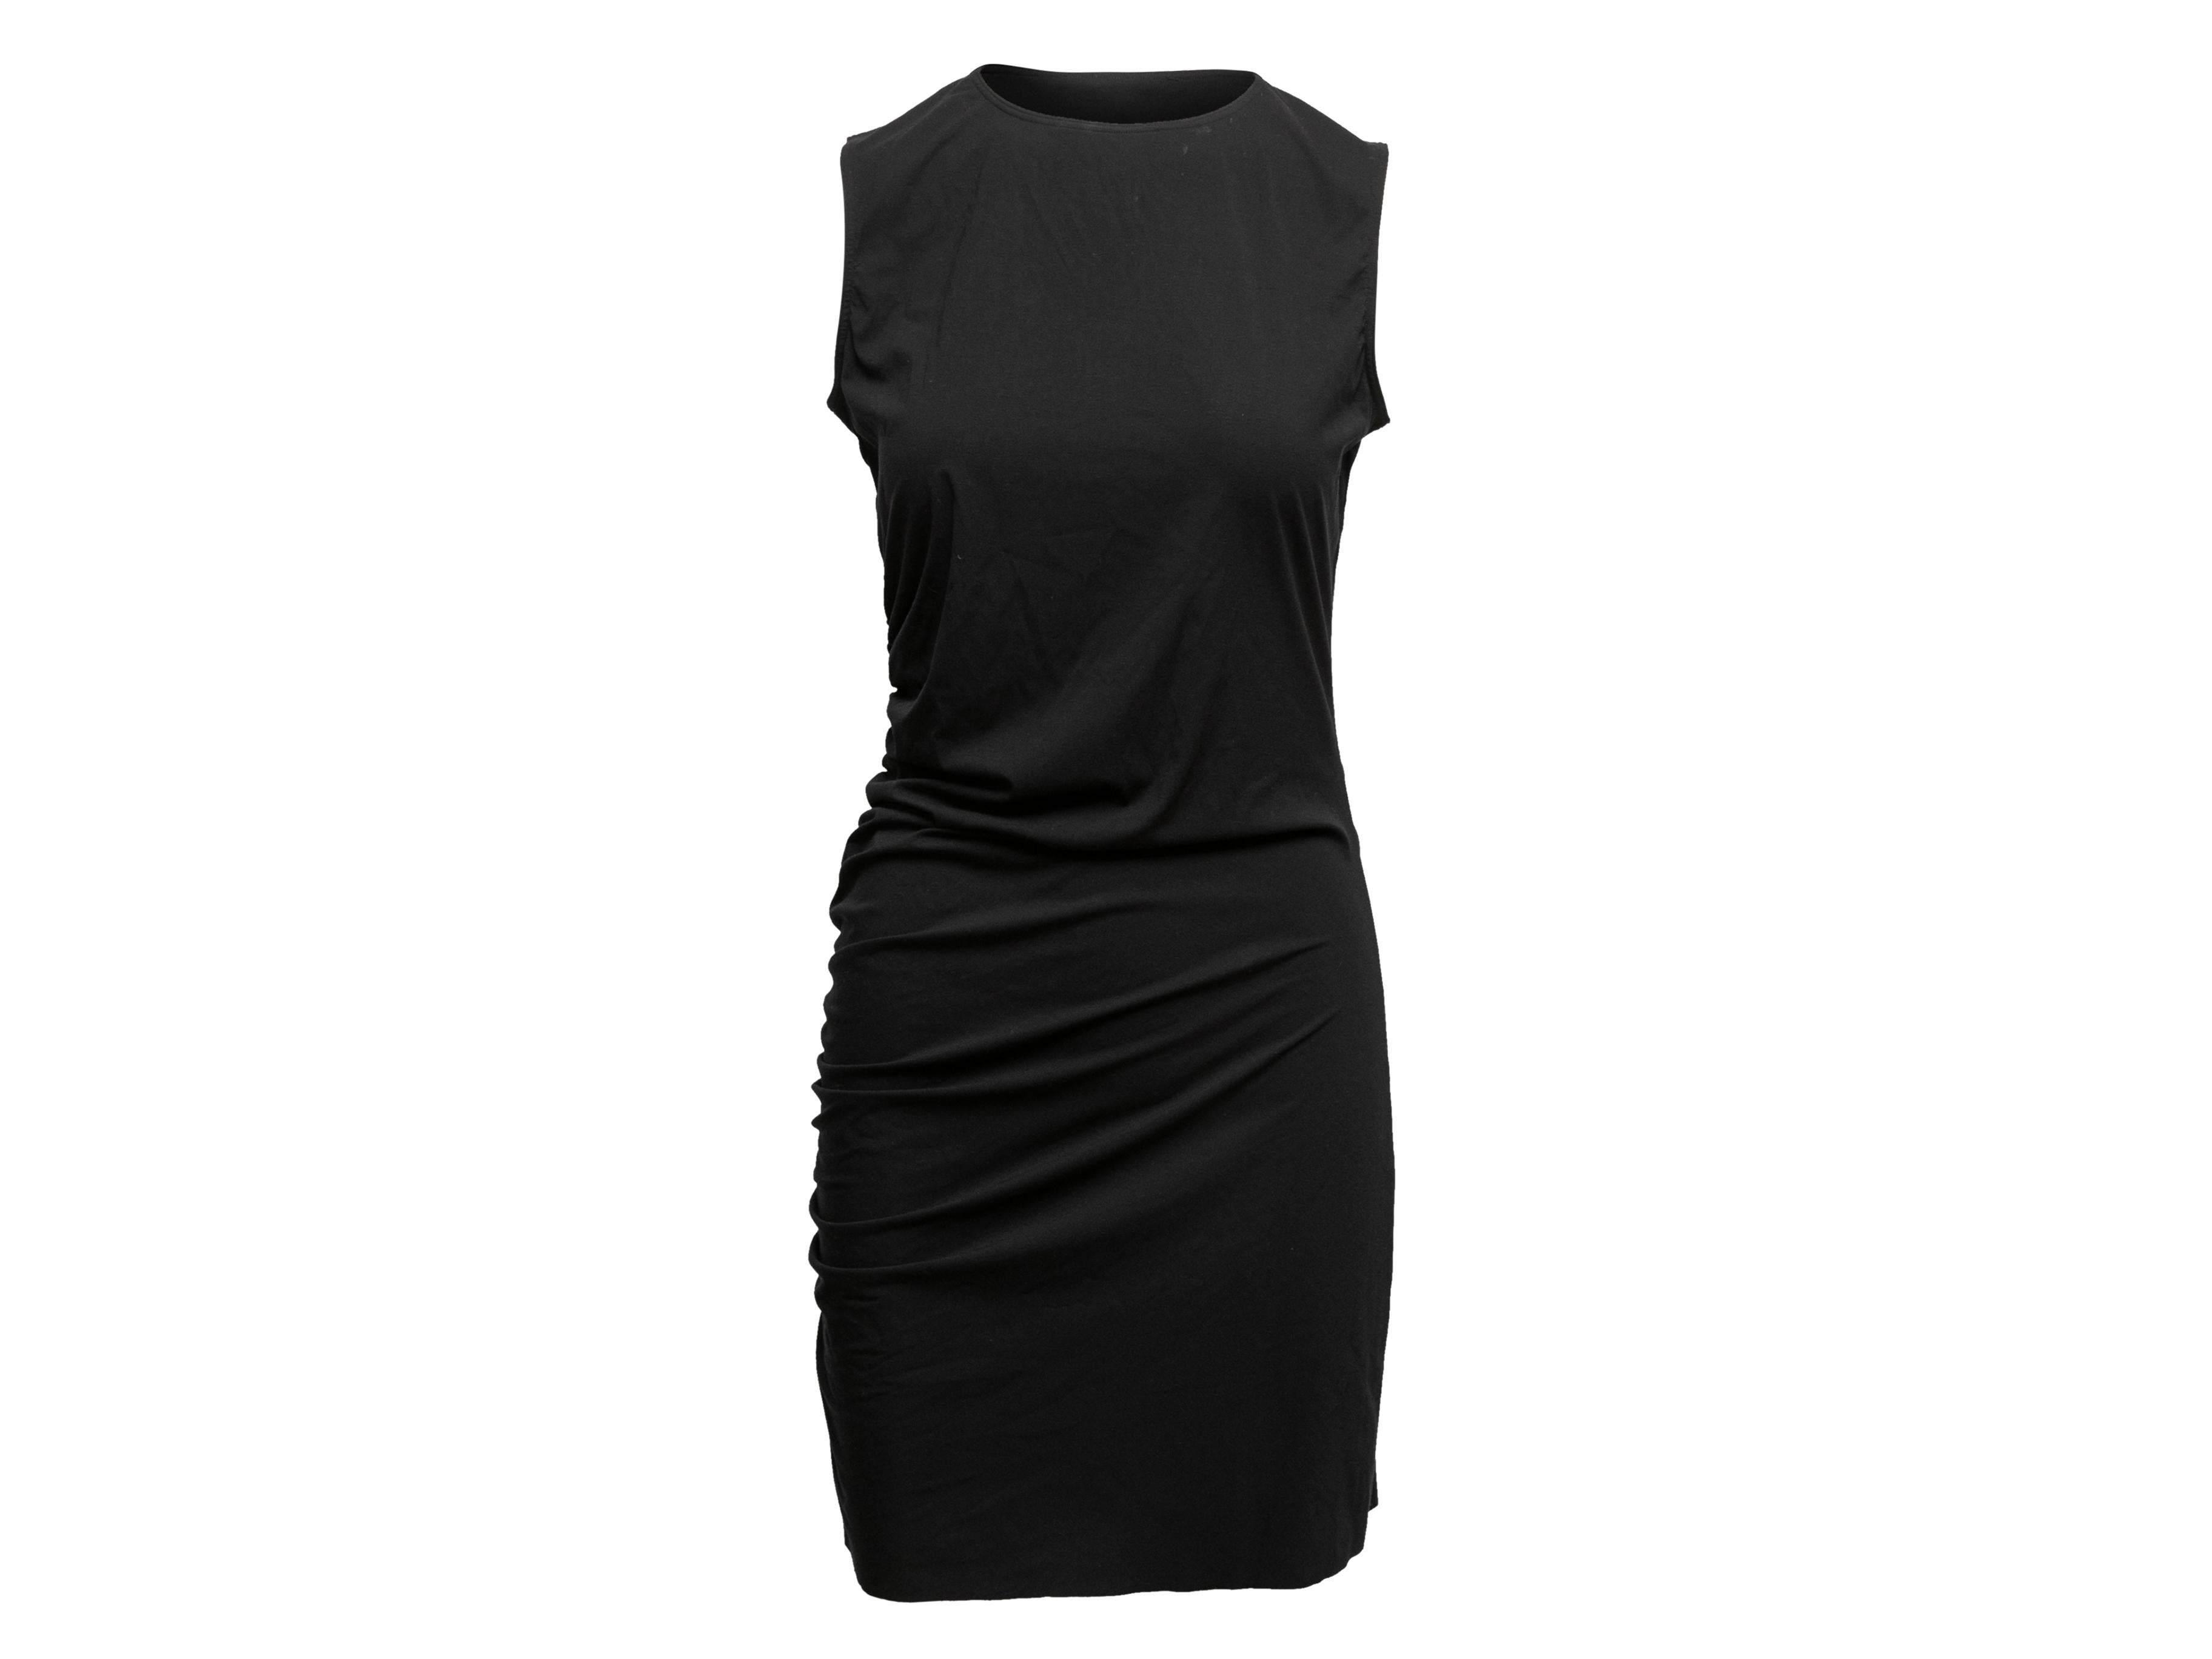 Black sleeveless bodycon dress by Amina Muaddi x Wolford. Crew neck. Ruching at sides. 36